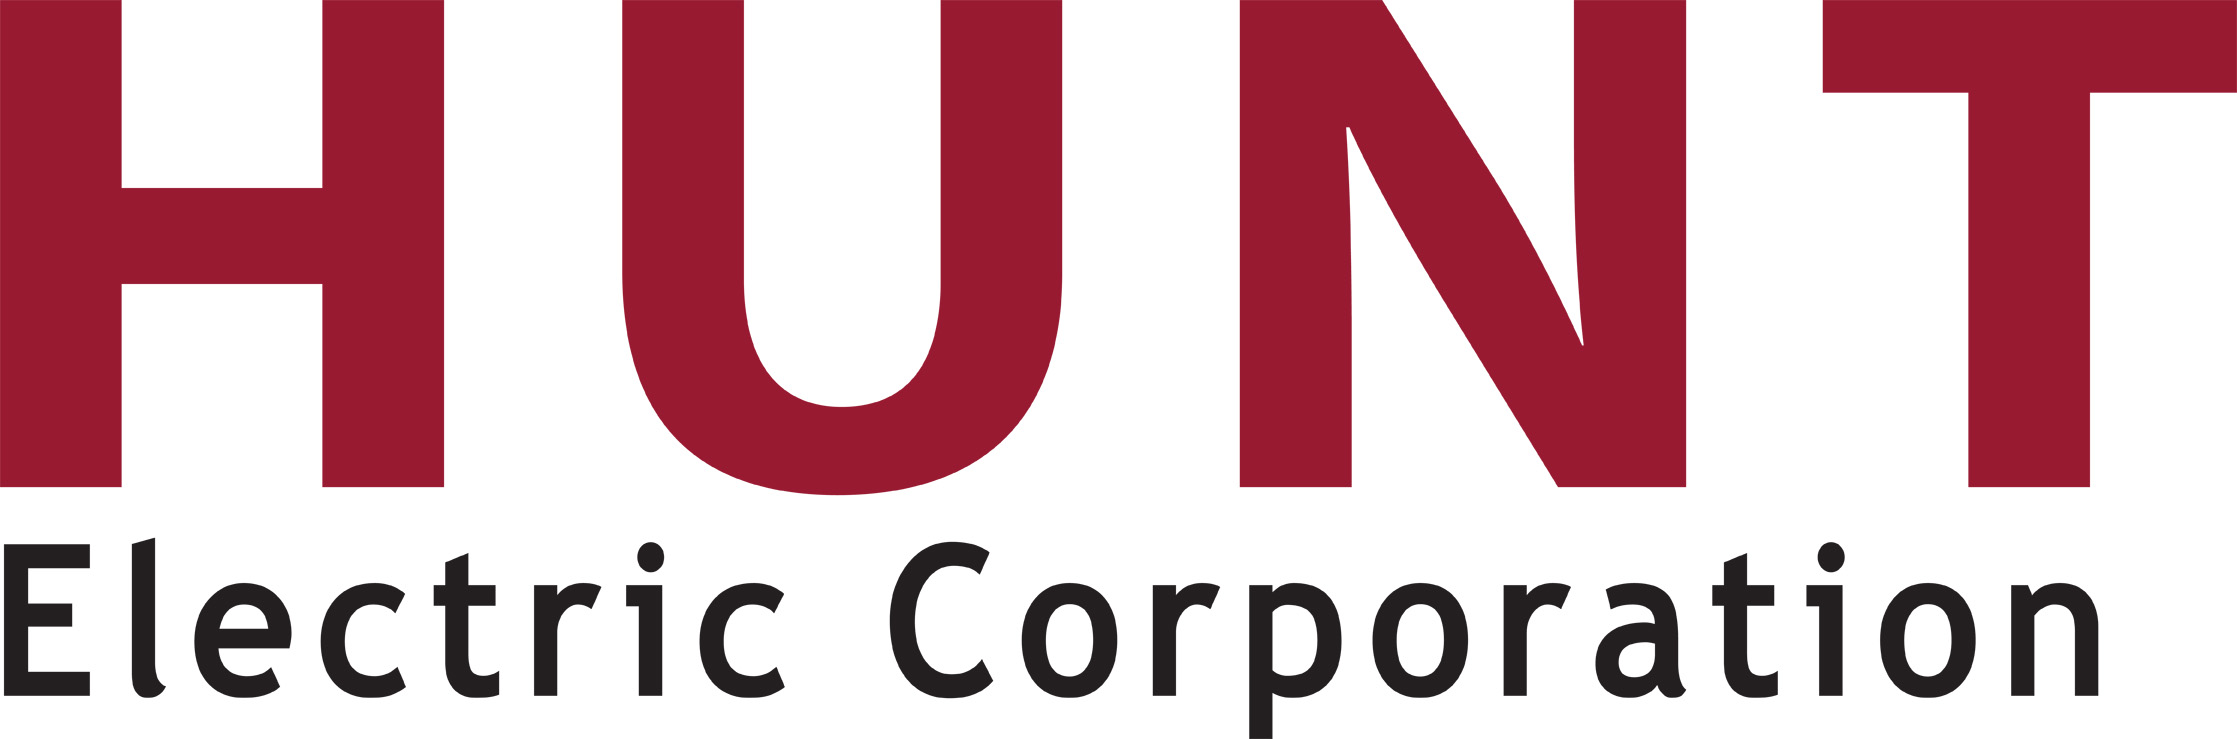 Hunt Electric Corporation